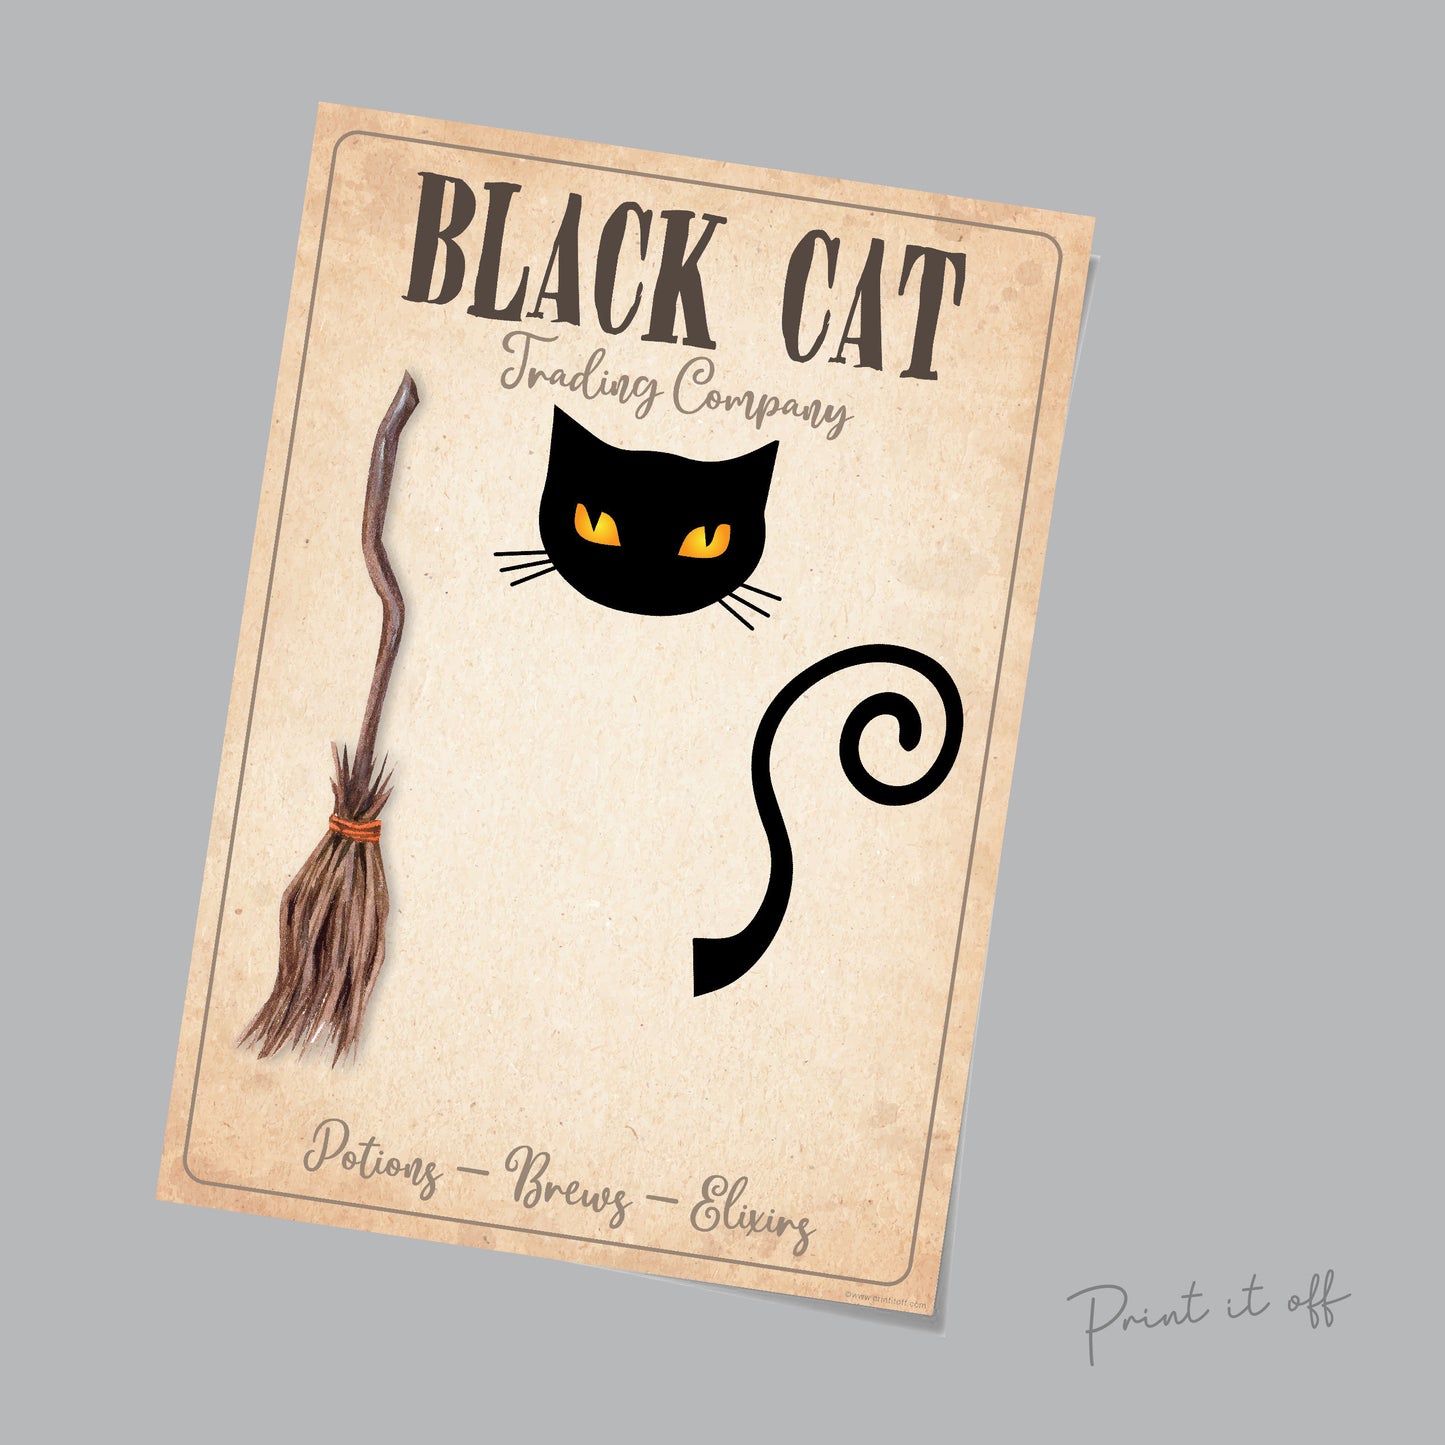 Black Cat Halloween Footprint Art Craft / Witch Broom Sign / Kids Toddler Baby Card Memory Activity Decoration Keepsake / Print It Off  0587